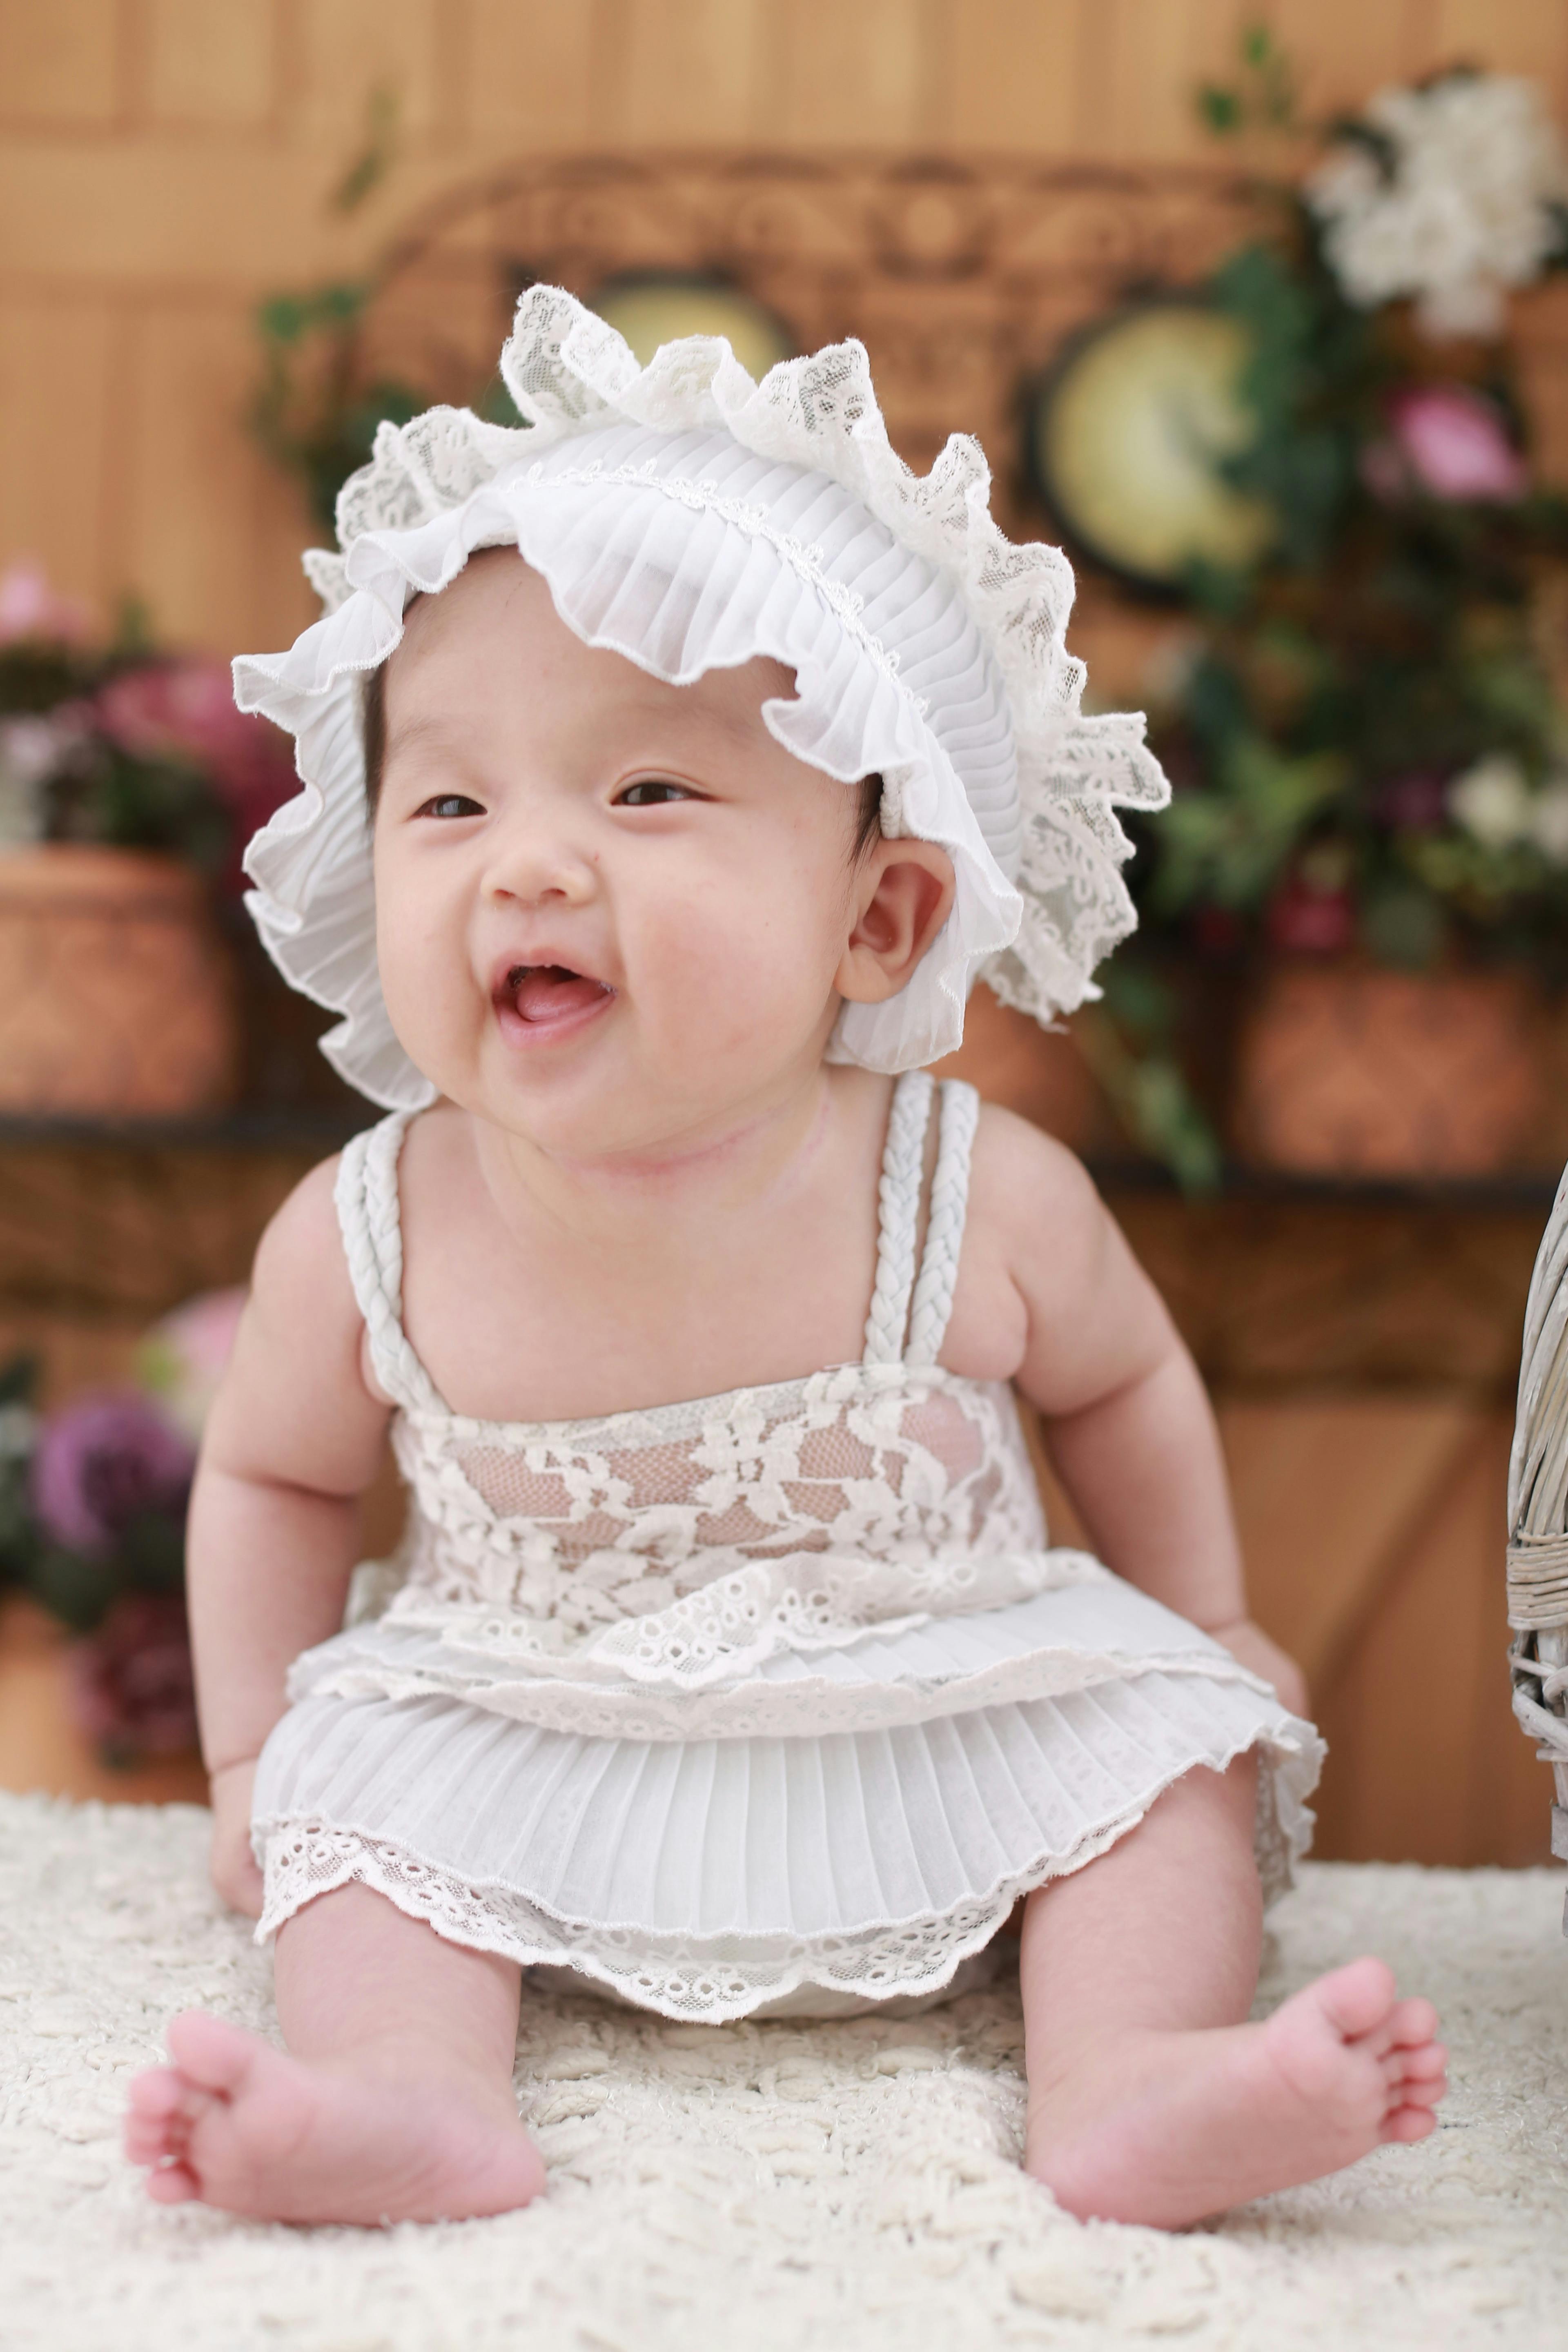 Baby in White Dress With White Headdress · Free Stock Photo